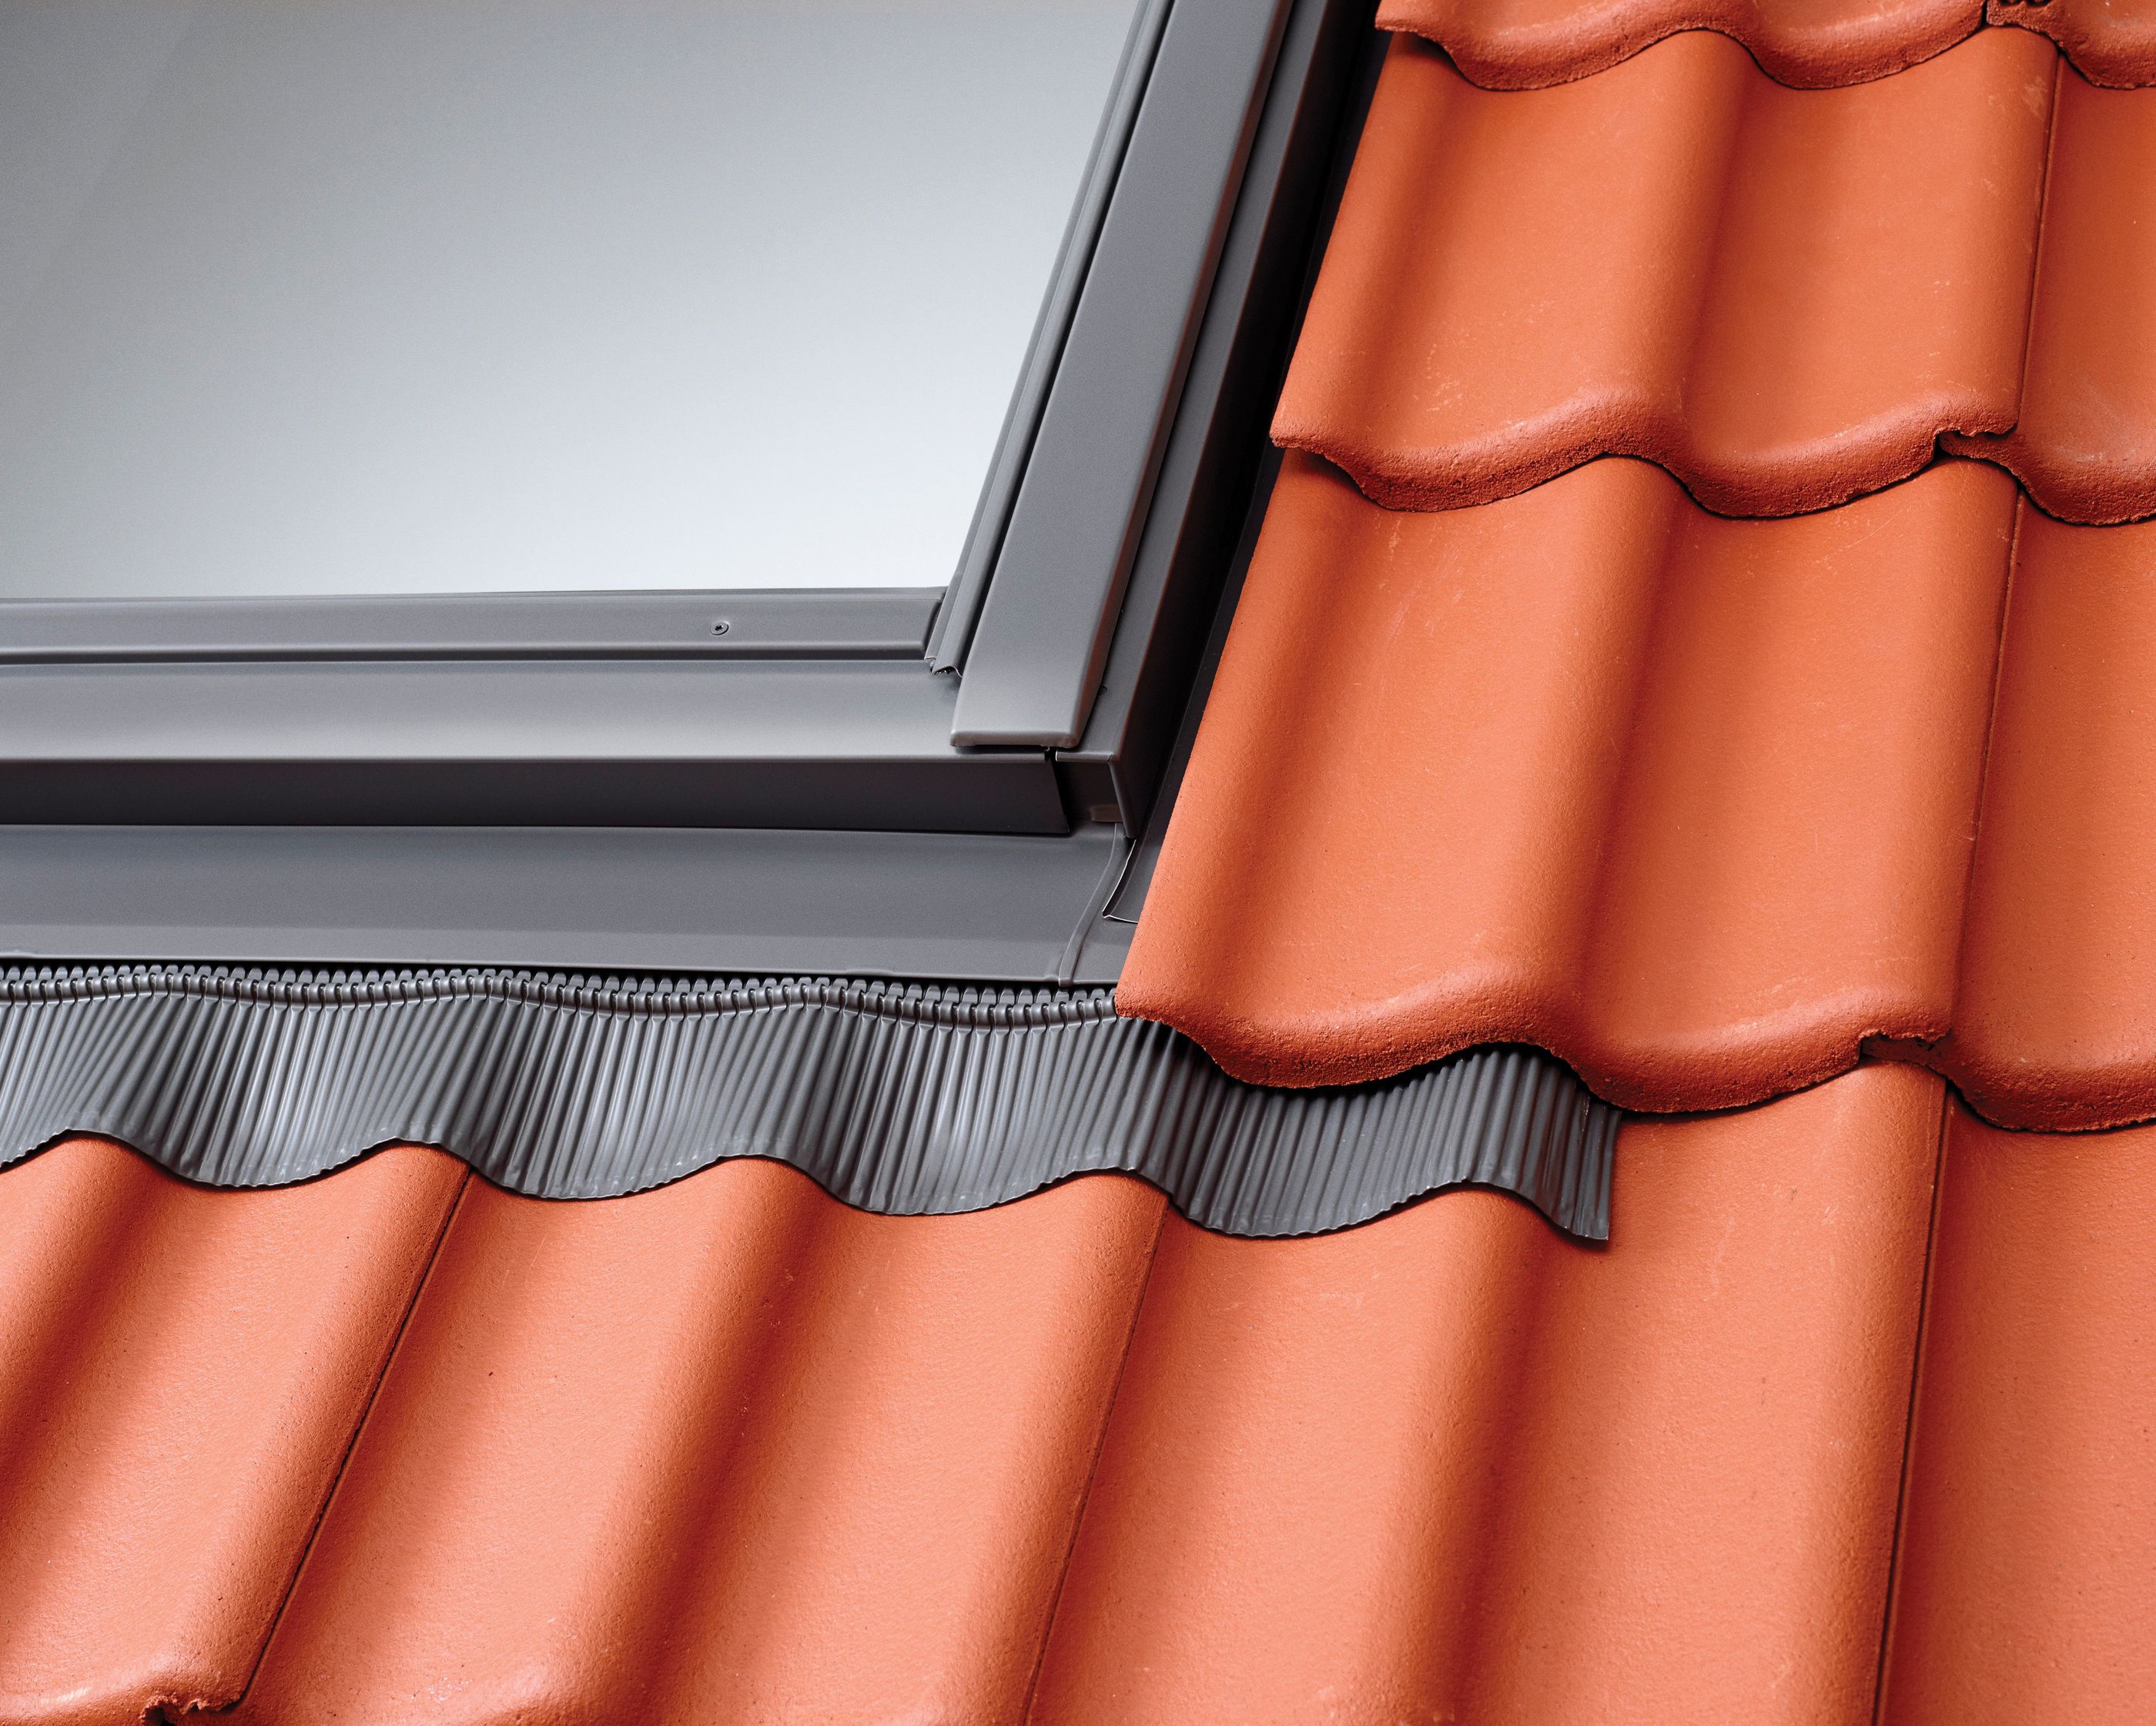 VELUX EDW Tile Roof Window Flashing - 1140 x 1180mm